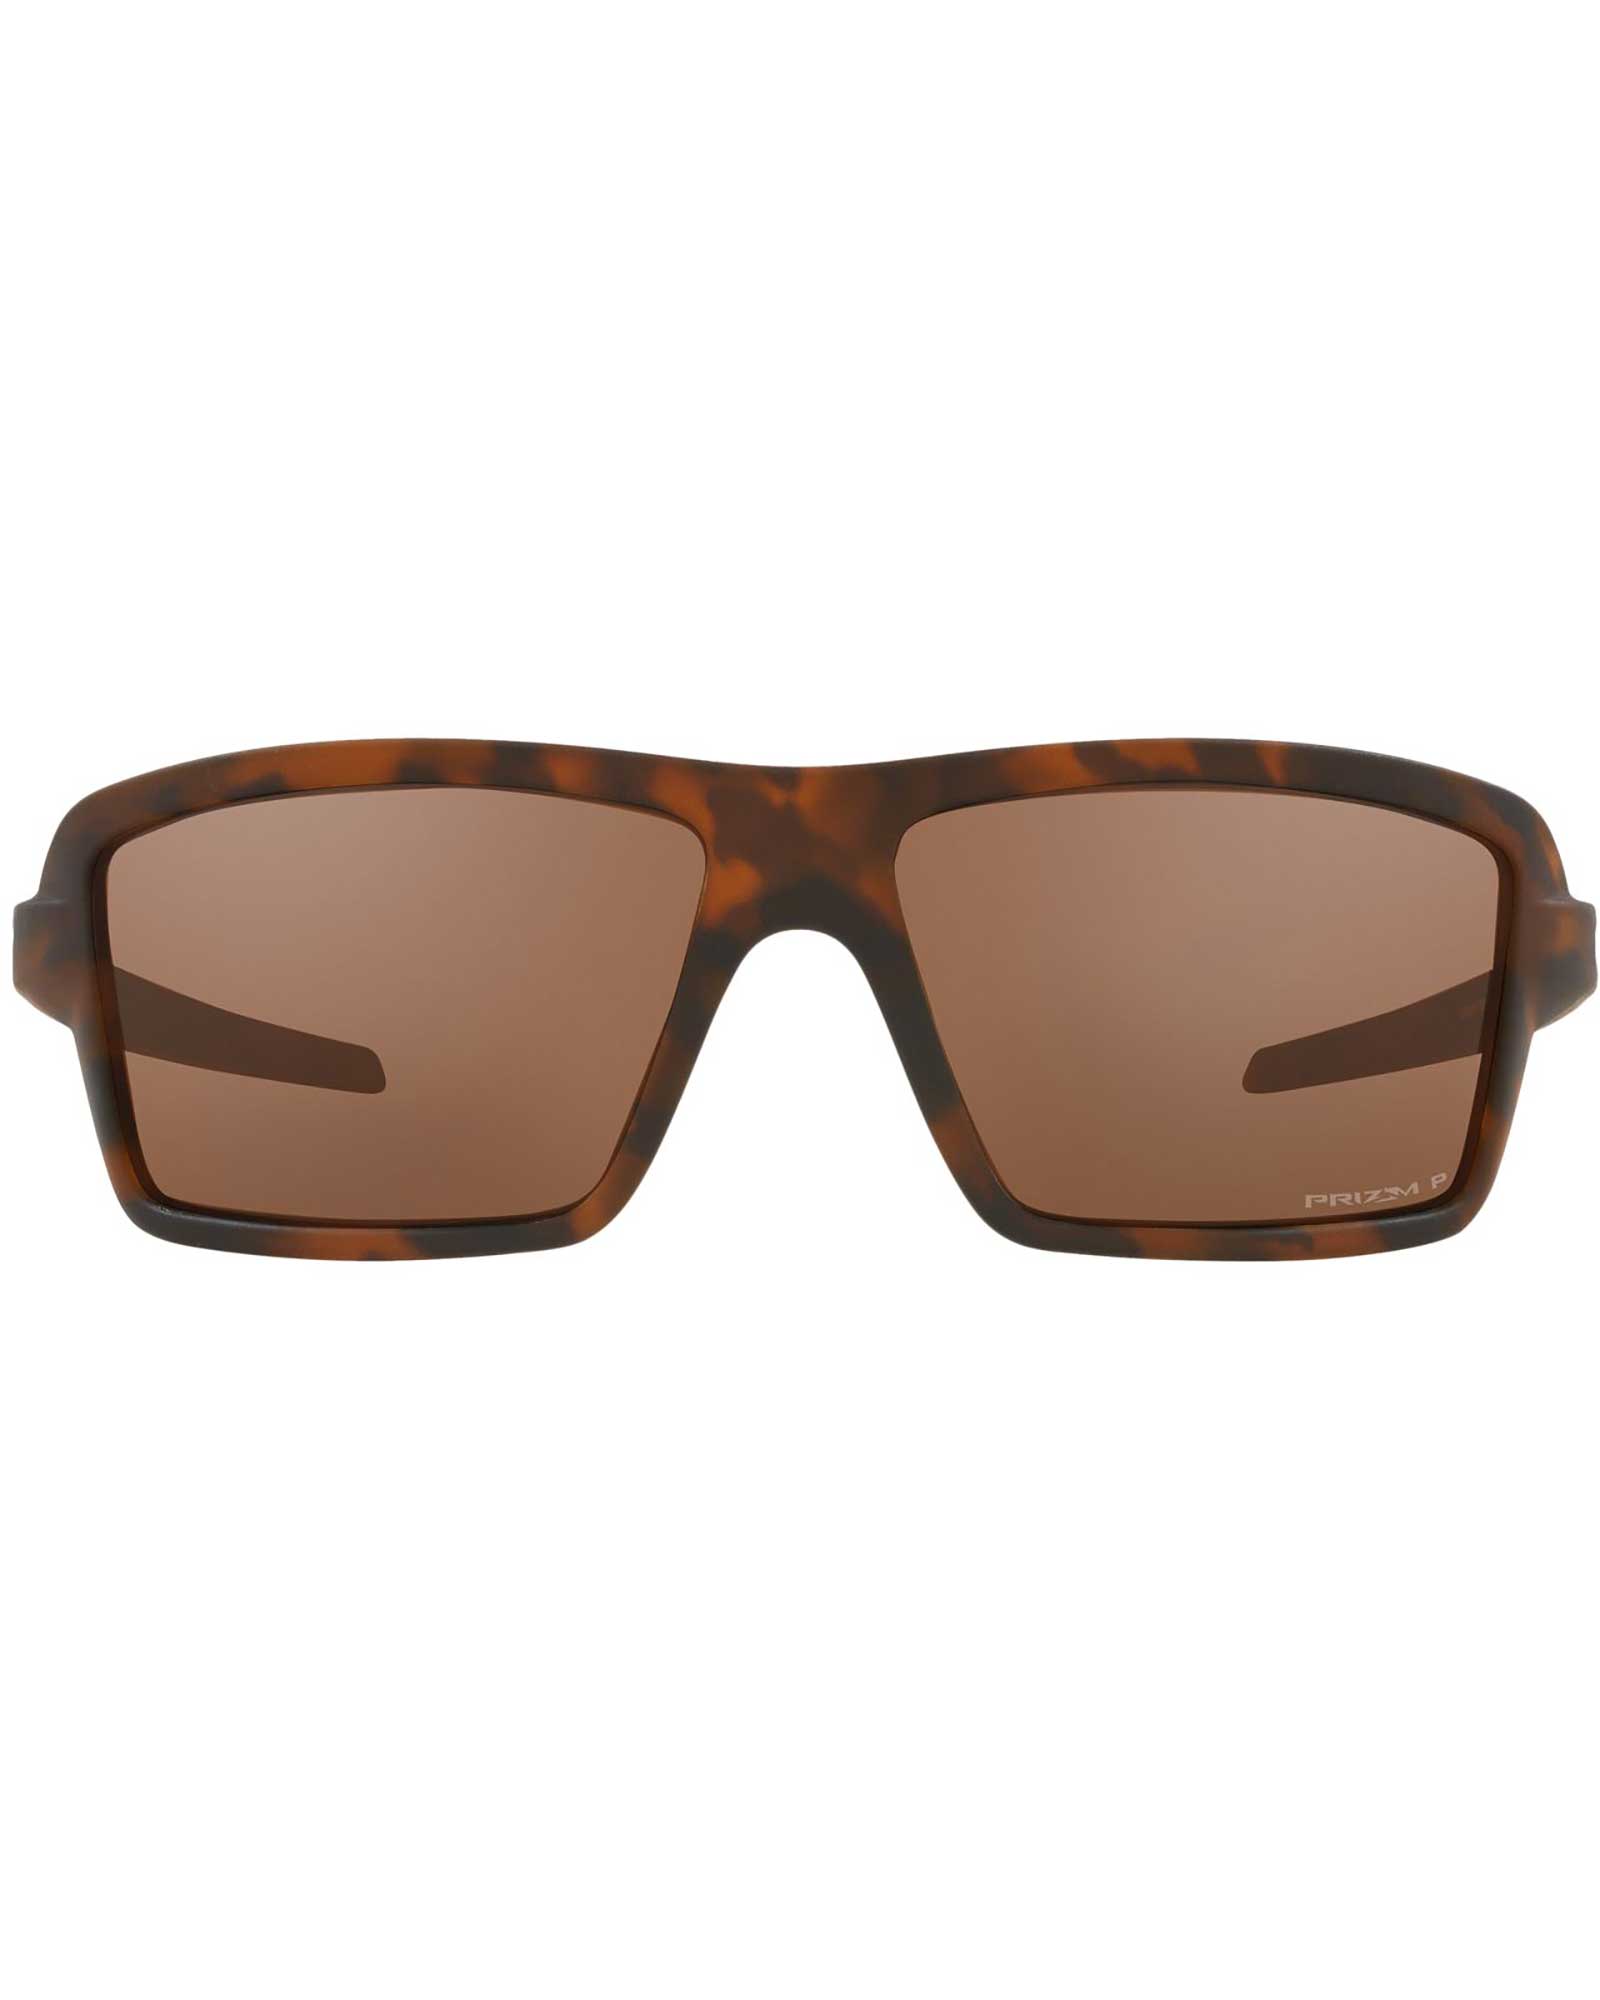 Oakley Cables Brown Tortoise / Prizm Tungsten Polarized Sunglasses